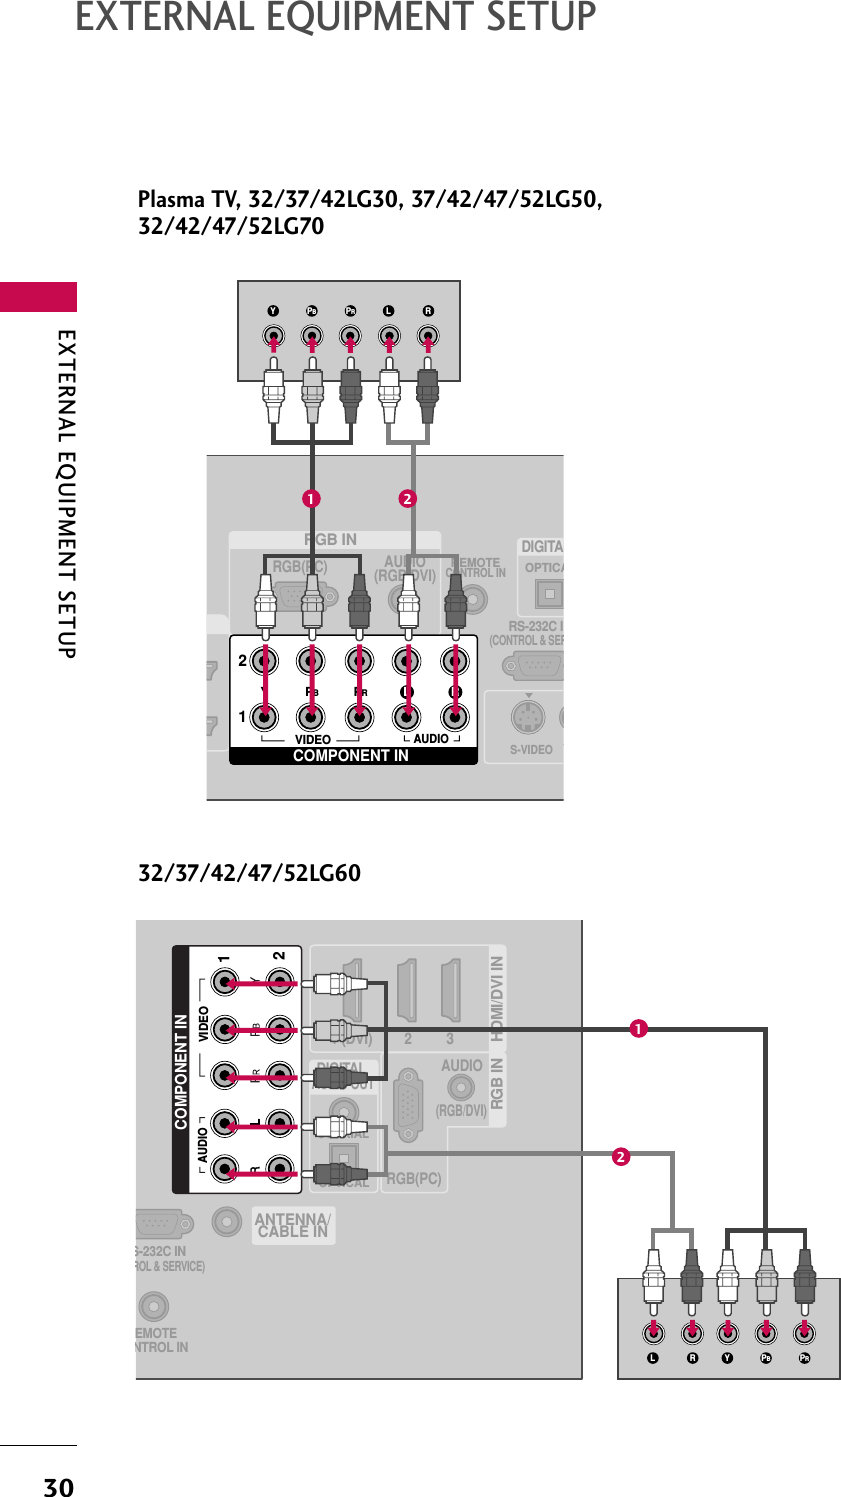 EXTERNAL EQUIPMENT SETUP30EXTERNAL EQUIPMENT SETUPRGB INAUDIO(RGB/DVI)RGB(PC)REMOTECONTROL INRS-232C I(CONTROL &amp; SEROPTICADIGITAVS-VIDEOCOMPONENT IN12VIDEOLYPBPRRAUDIOY L RPBPR1 2(RGB/DVI)AUDIORGB(PC)EMOTENTROL INS-232C INROL &amp; SERVICE)OPTICALCOAXIALDIGITAL AUDIO OUT1 (DVI) 2 3HDMI/DVI IN RGB IN ANTENNA/CABLE INCOMPONENT IN21VIDEOAUDIOYL R PBPR1232/37/42/47/52LG60Plasma TV, 32/37/42LG30, 37/42/47/52LG50,32/42/47/52LG70